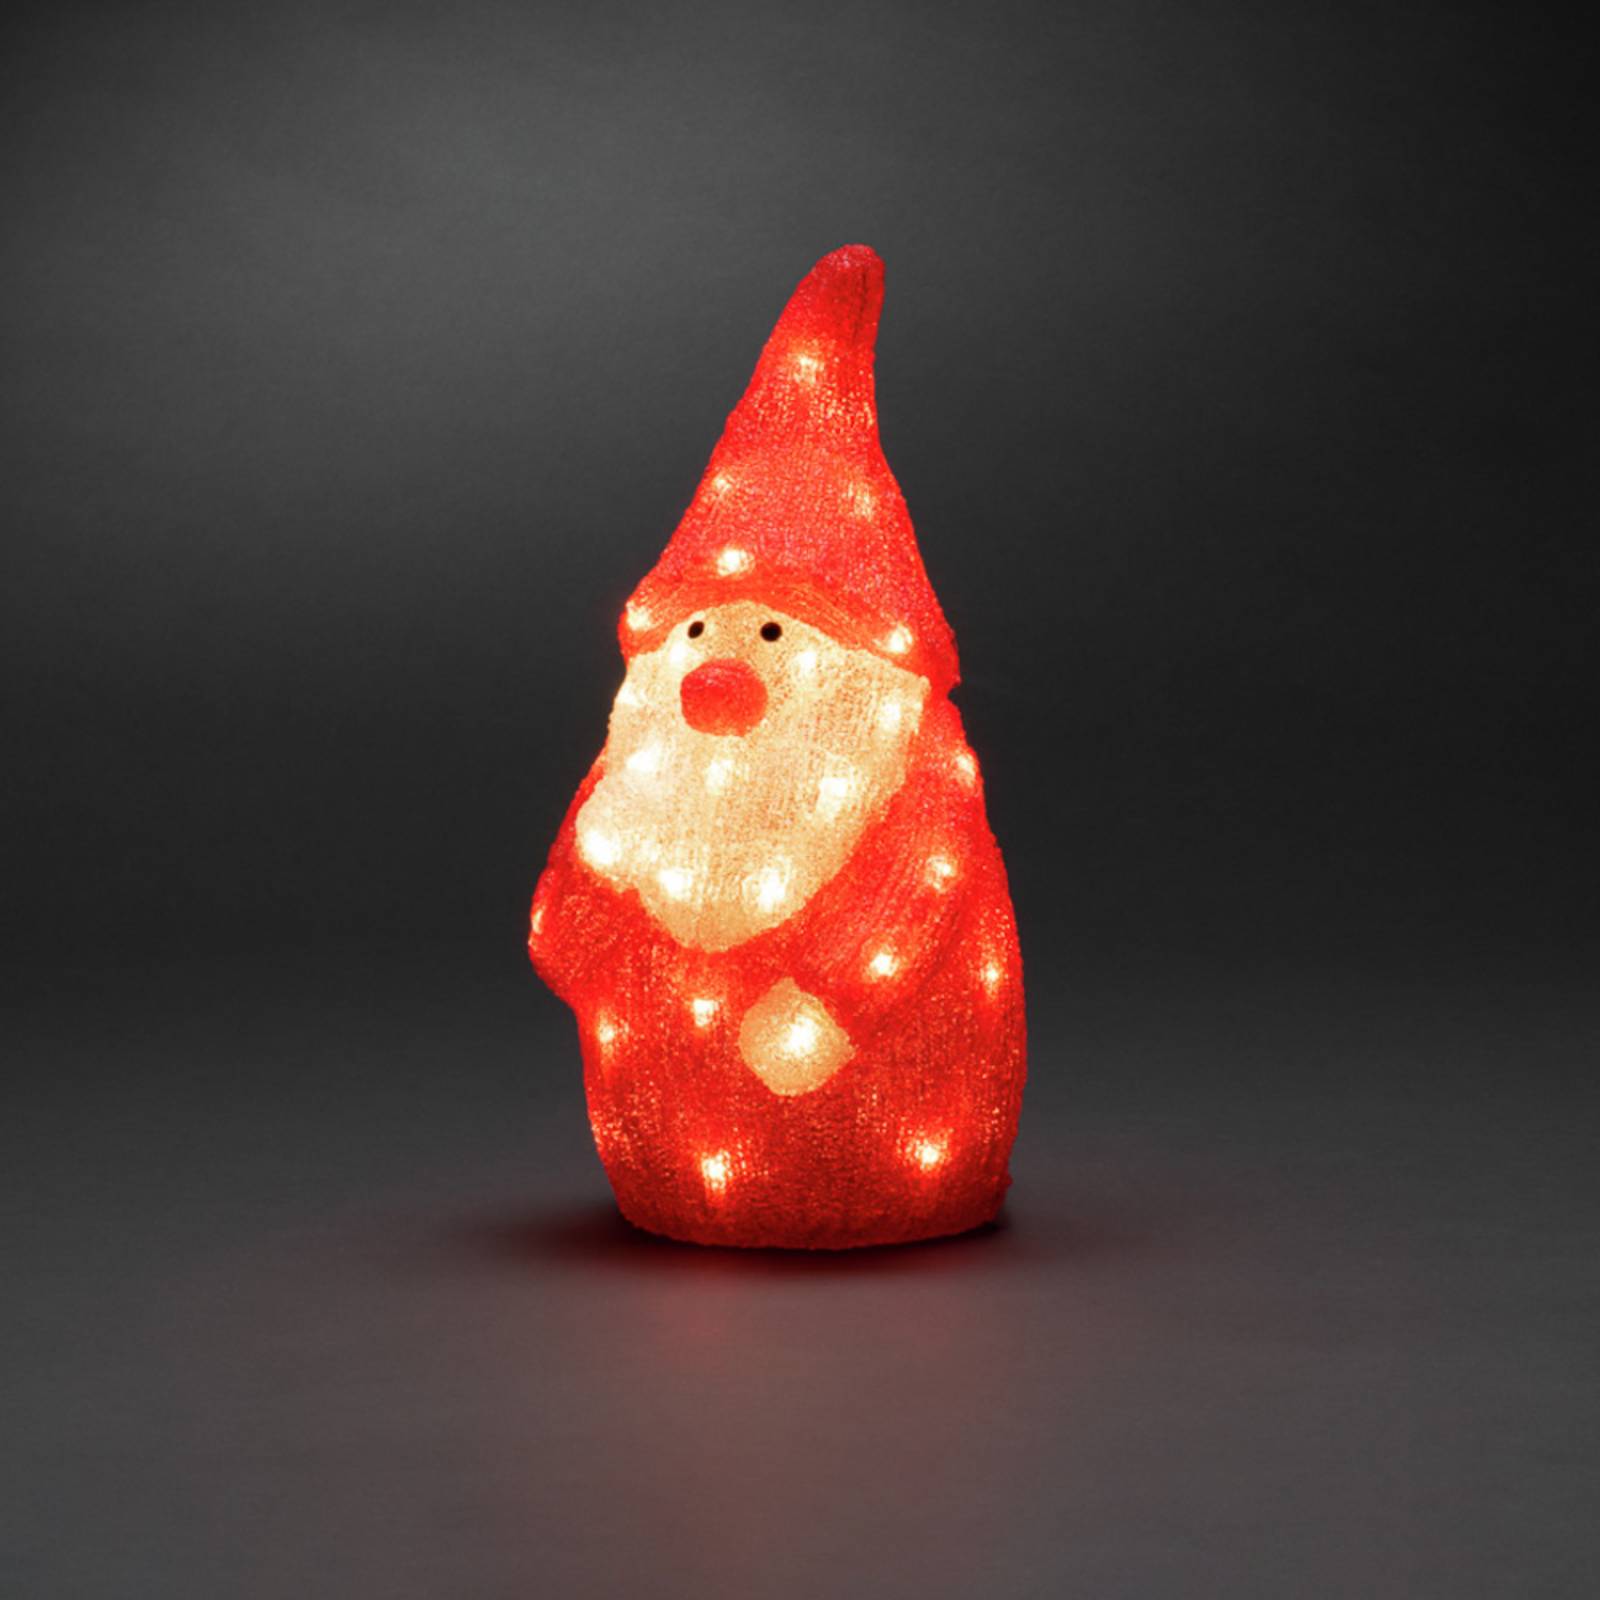 Konstsmide Christmas LED-dekorfigur Tomte röd IP44 höjd 38 cm